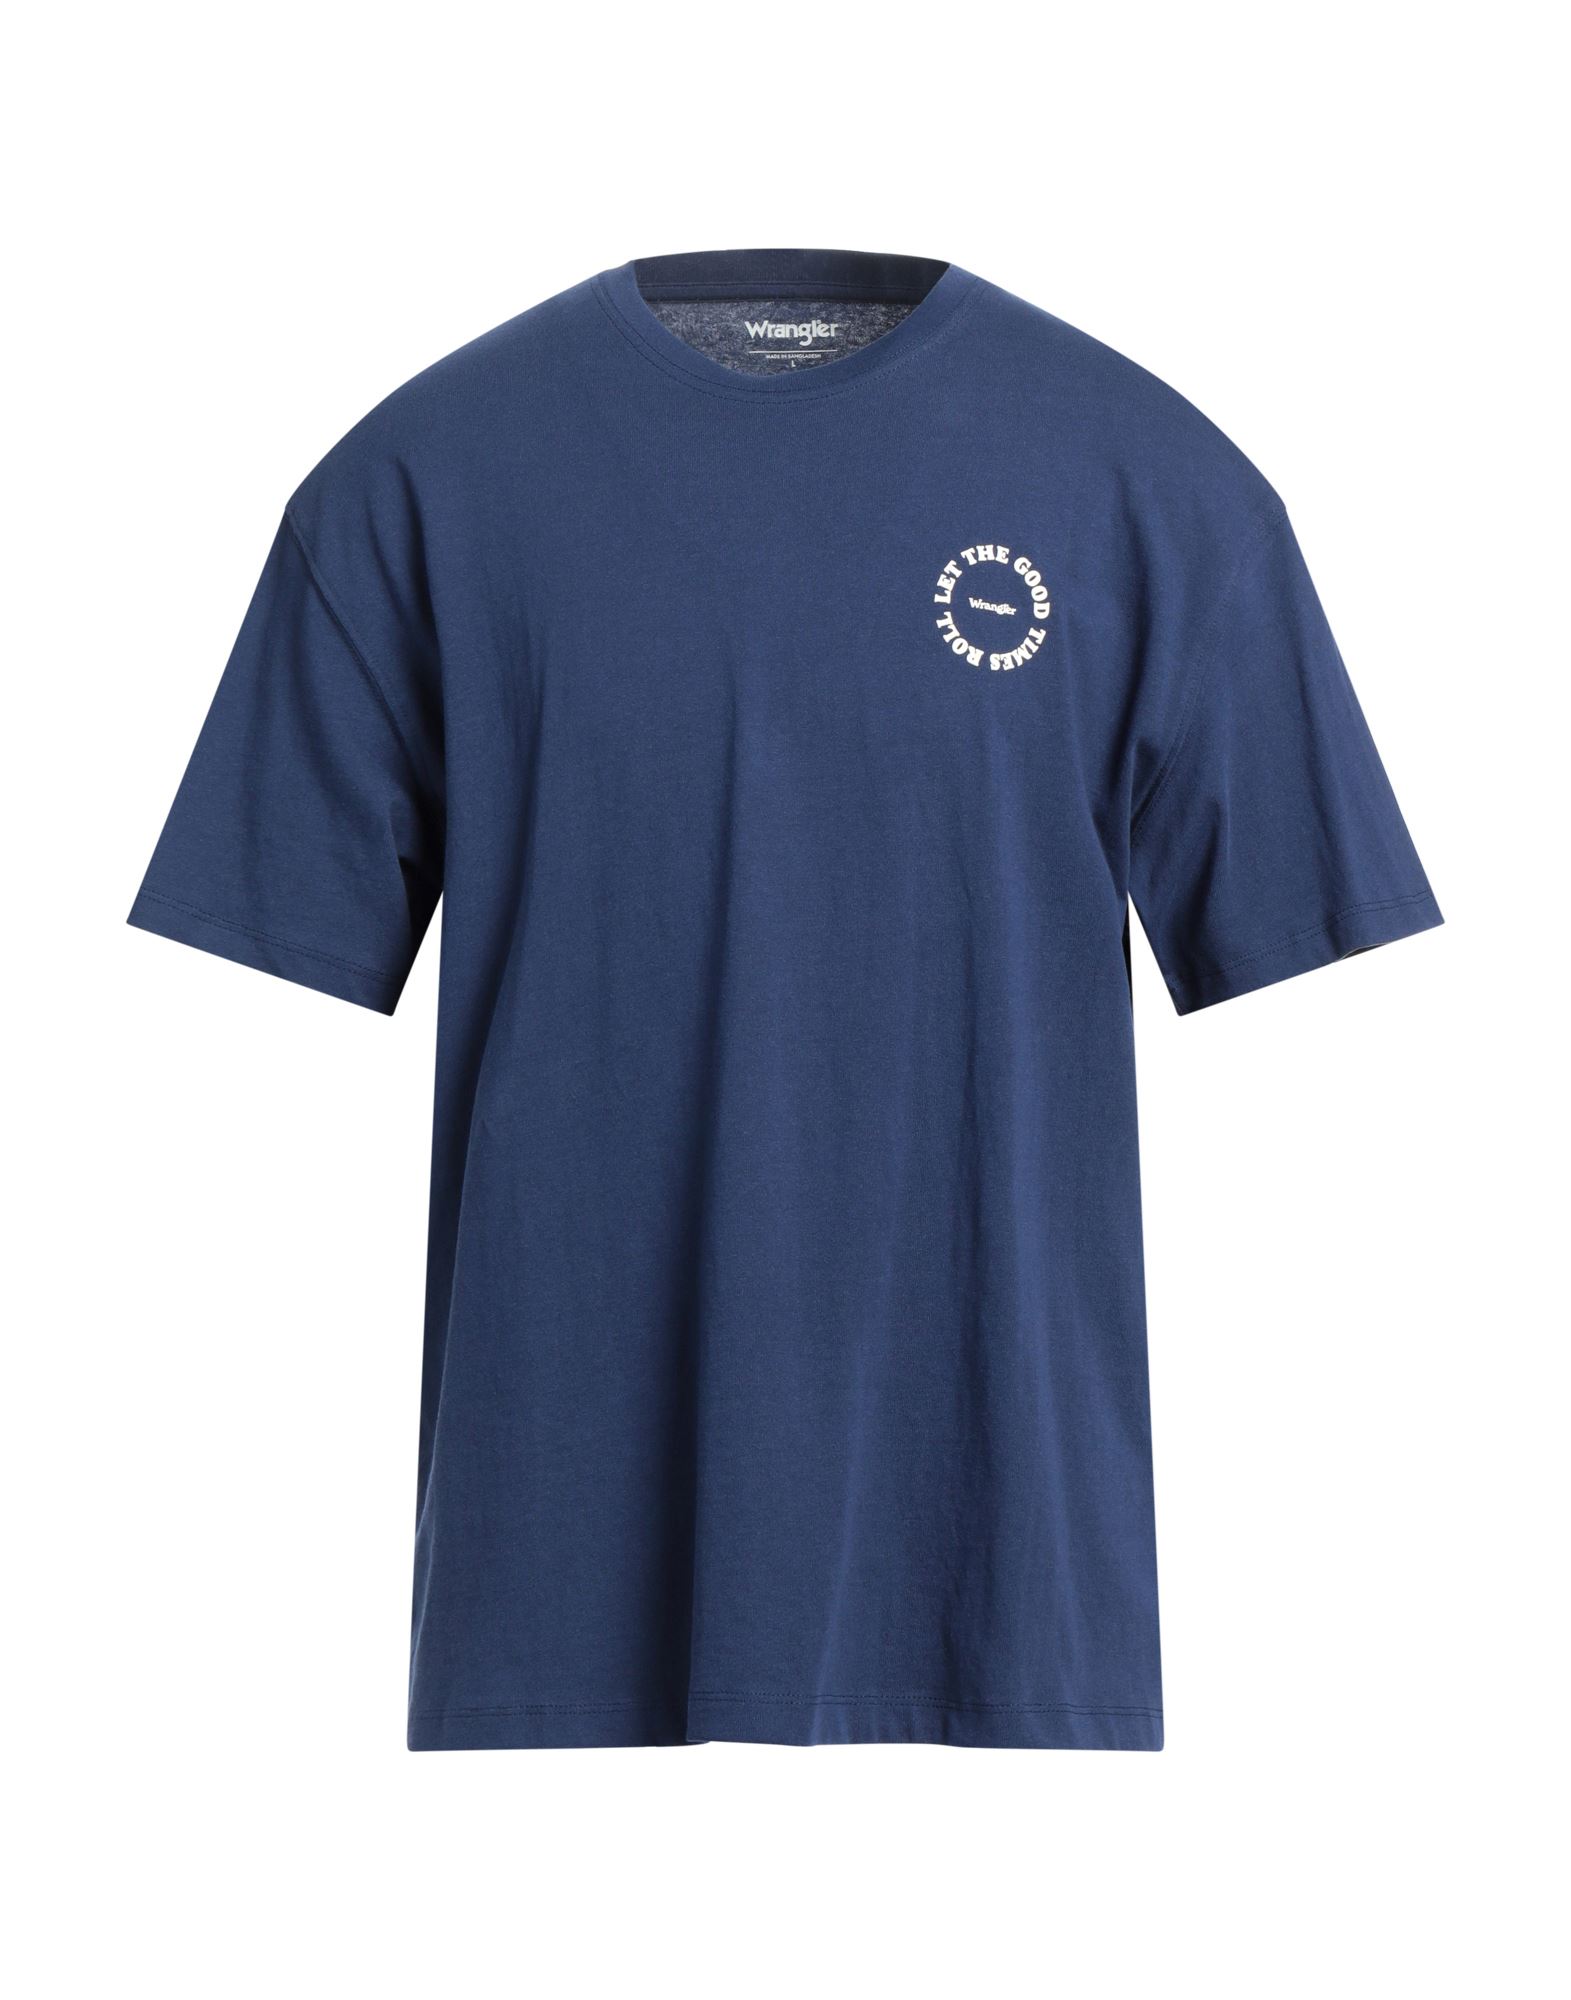 WRANGLER T-shirts Herren Nachtblau von WRANGLER